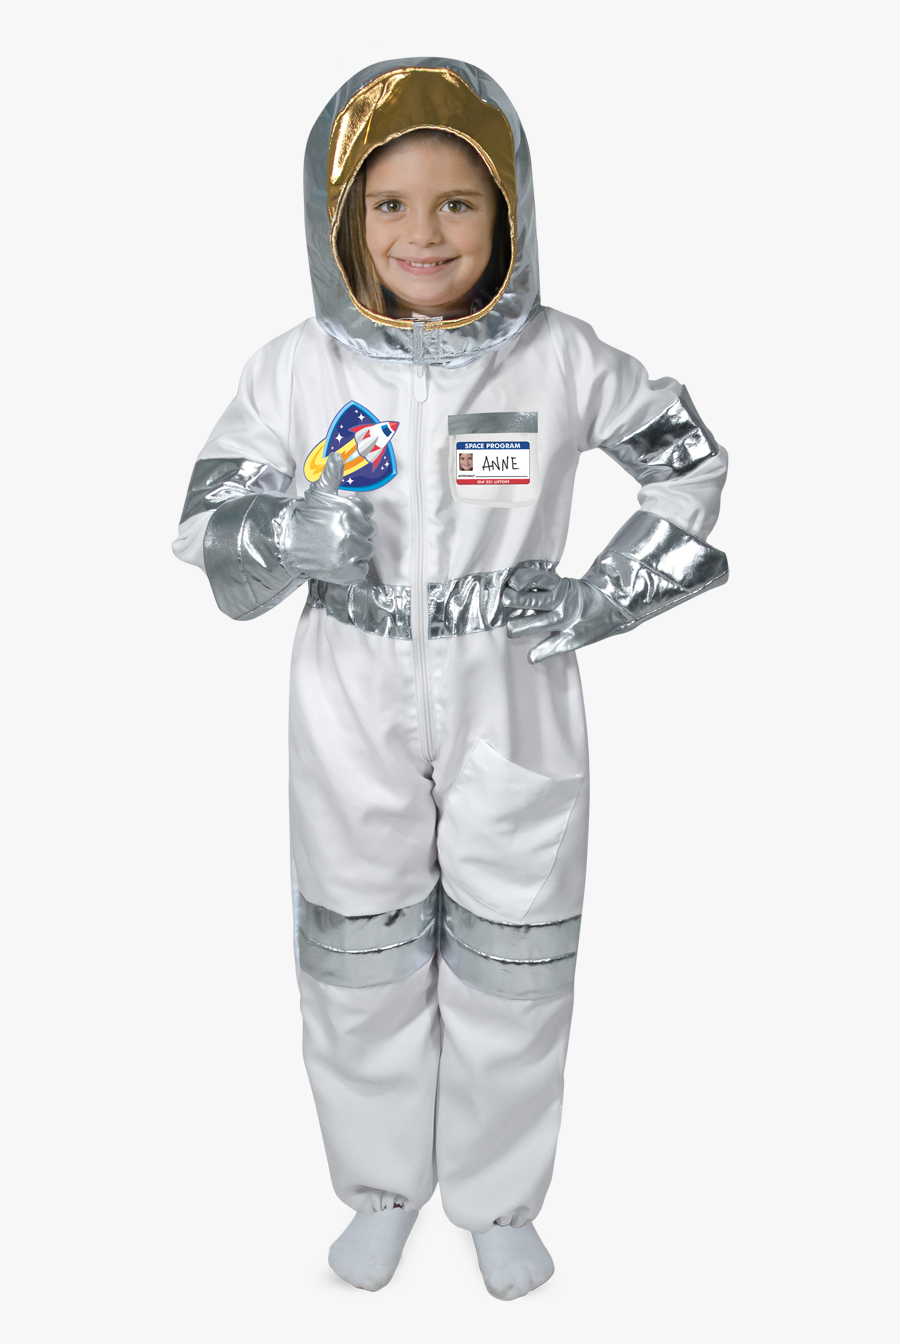 Exploring Kids Career Day Through Play - Astronaut Costume, Transparent Clipart